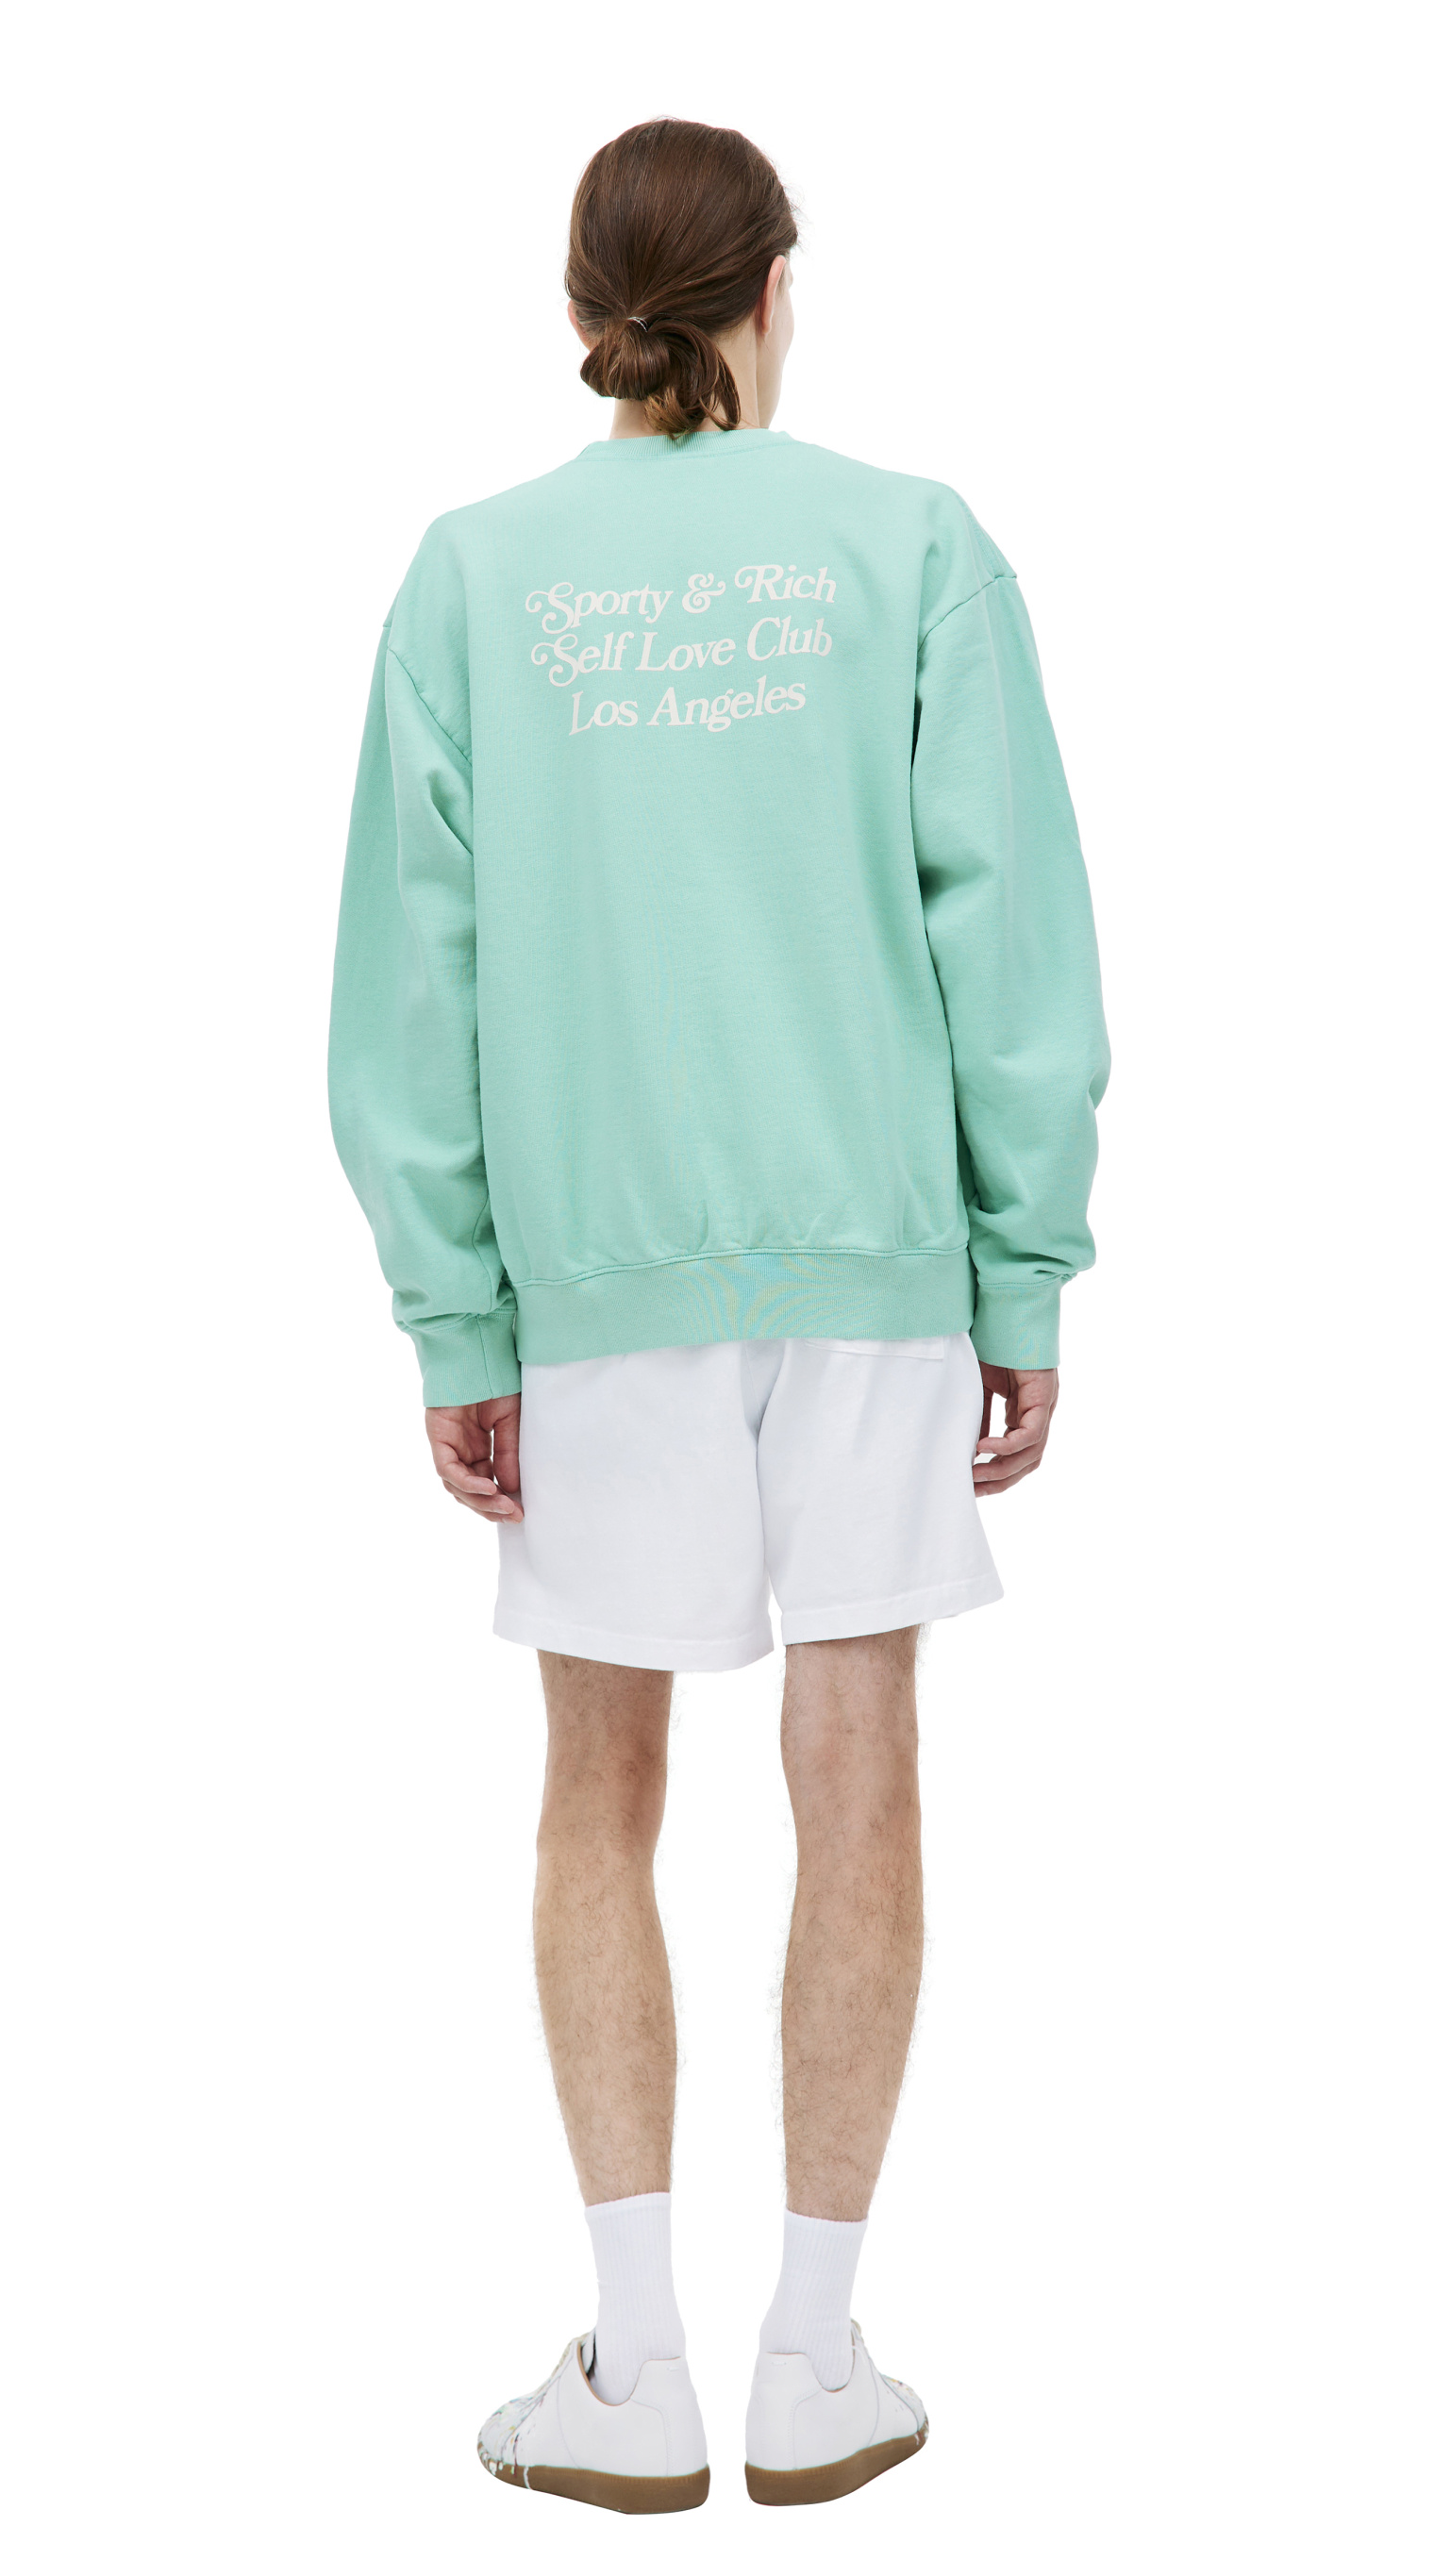 SPORTY & RICH \'Self Love Club\' printed sweatshirt